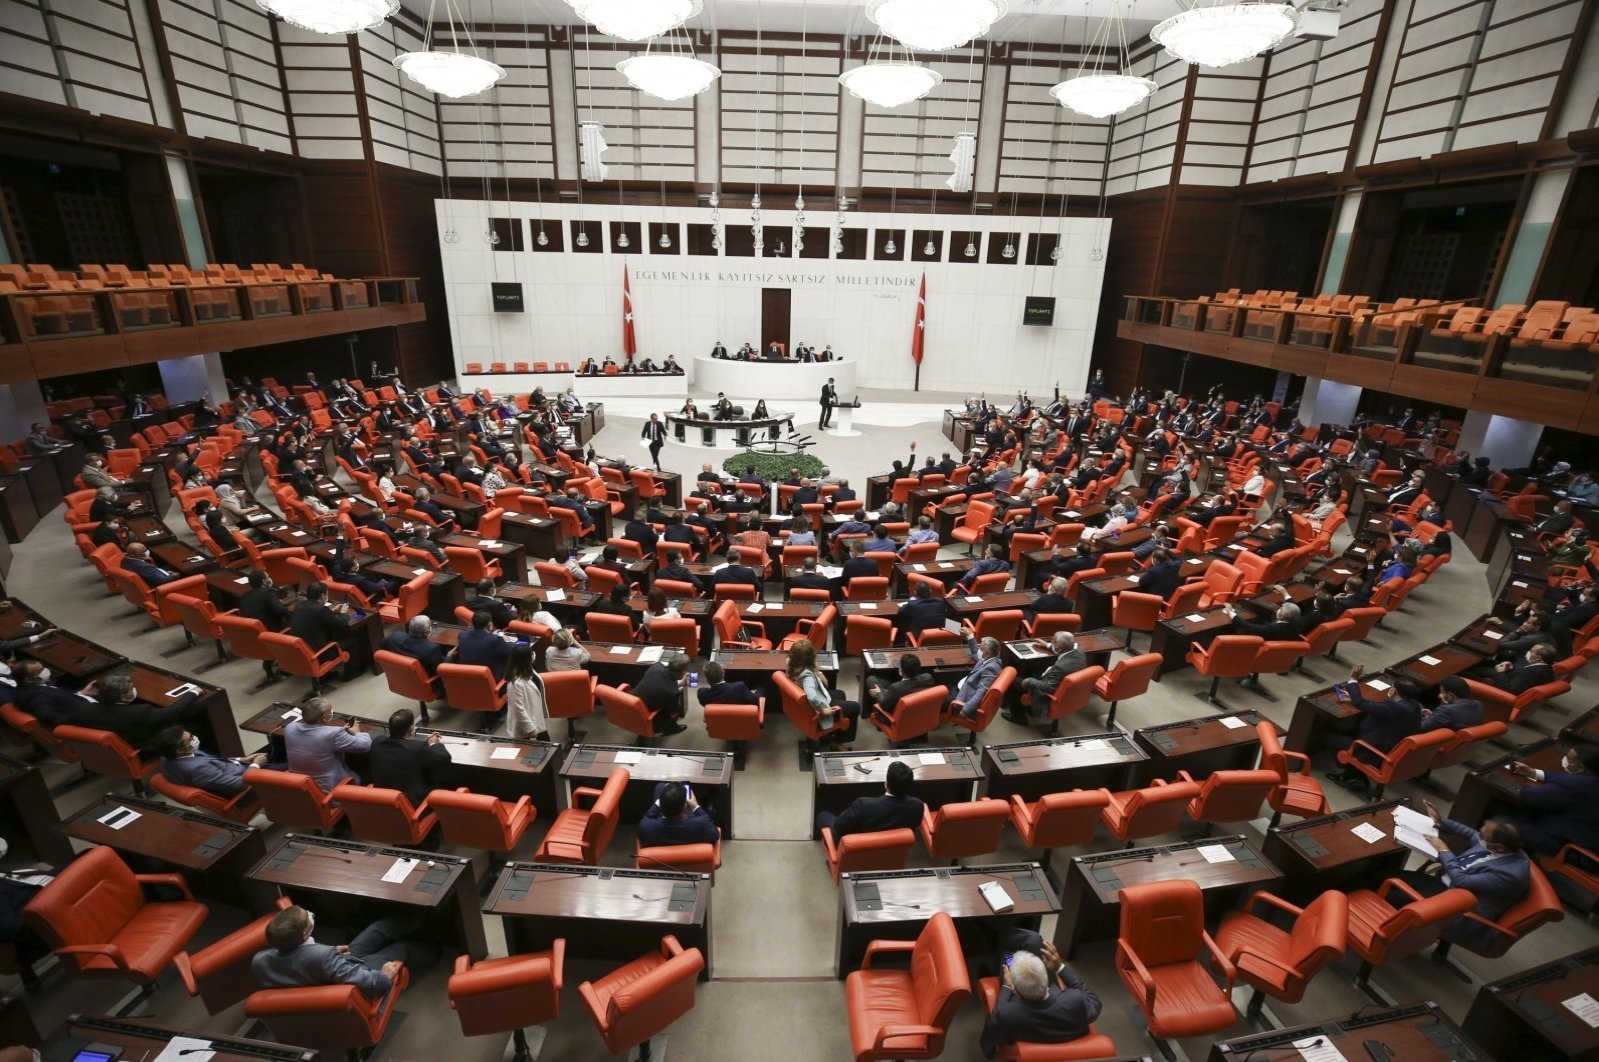 Undang-undang disinformasi baru akan segera diumumkan, kata pejabat Turki